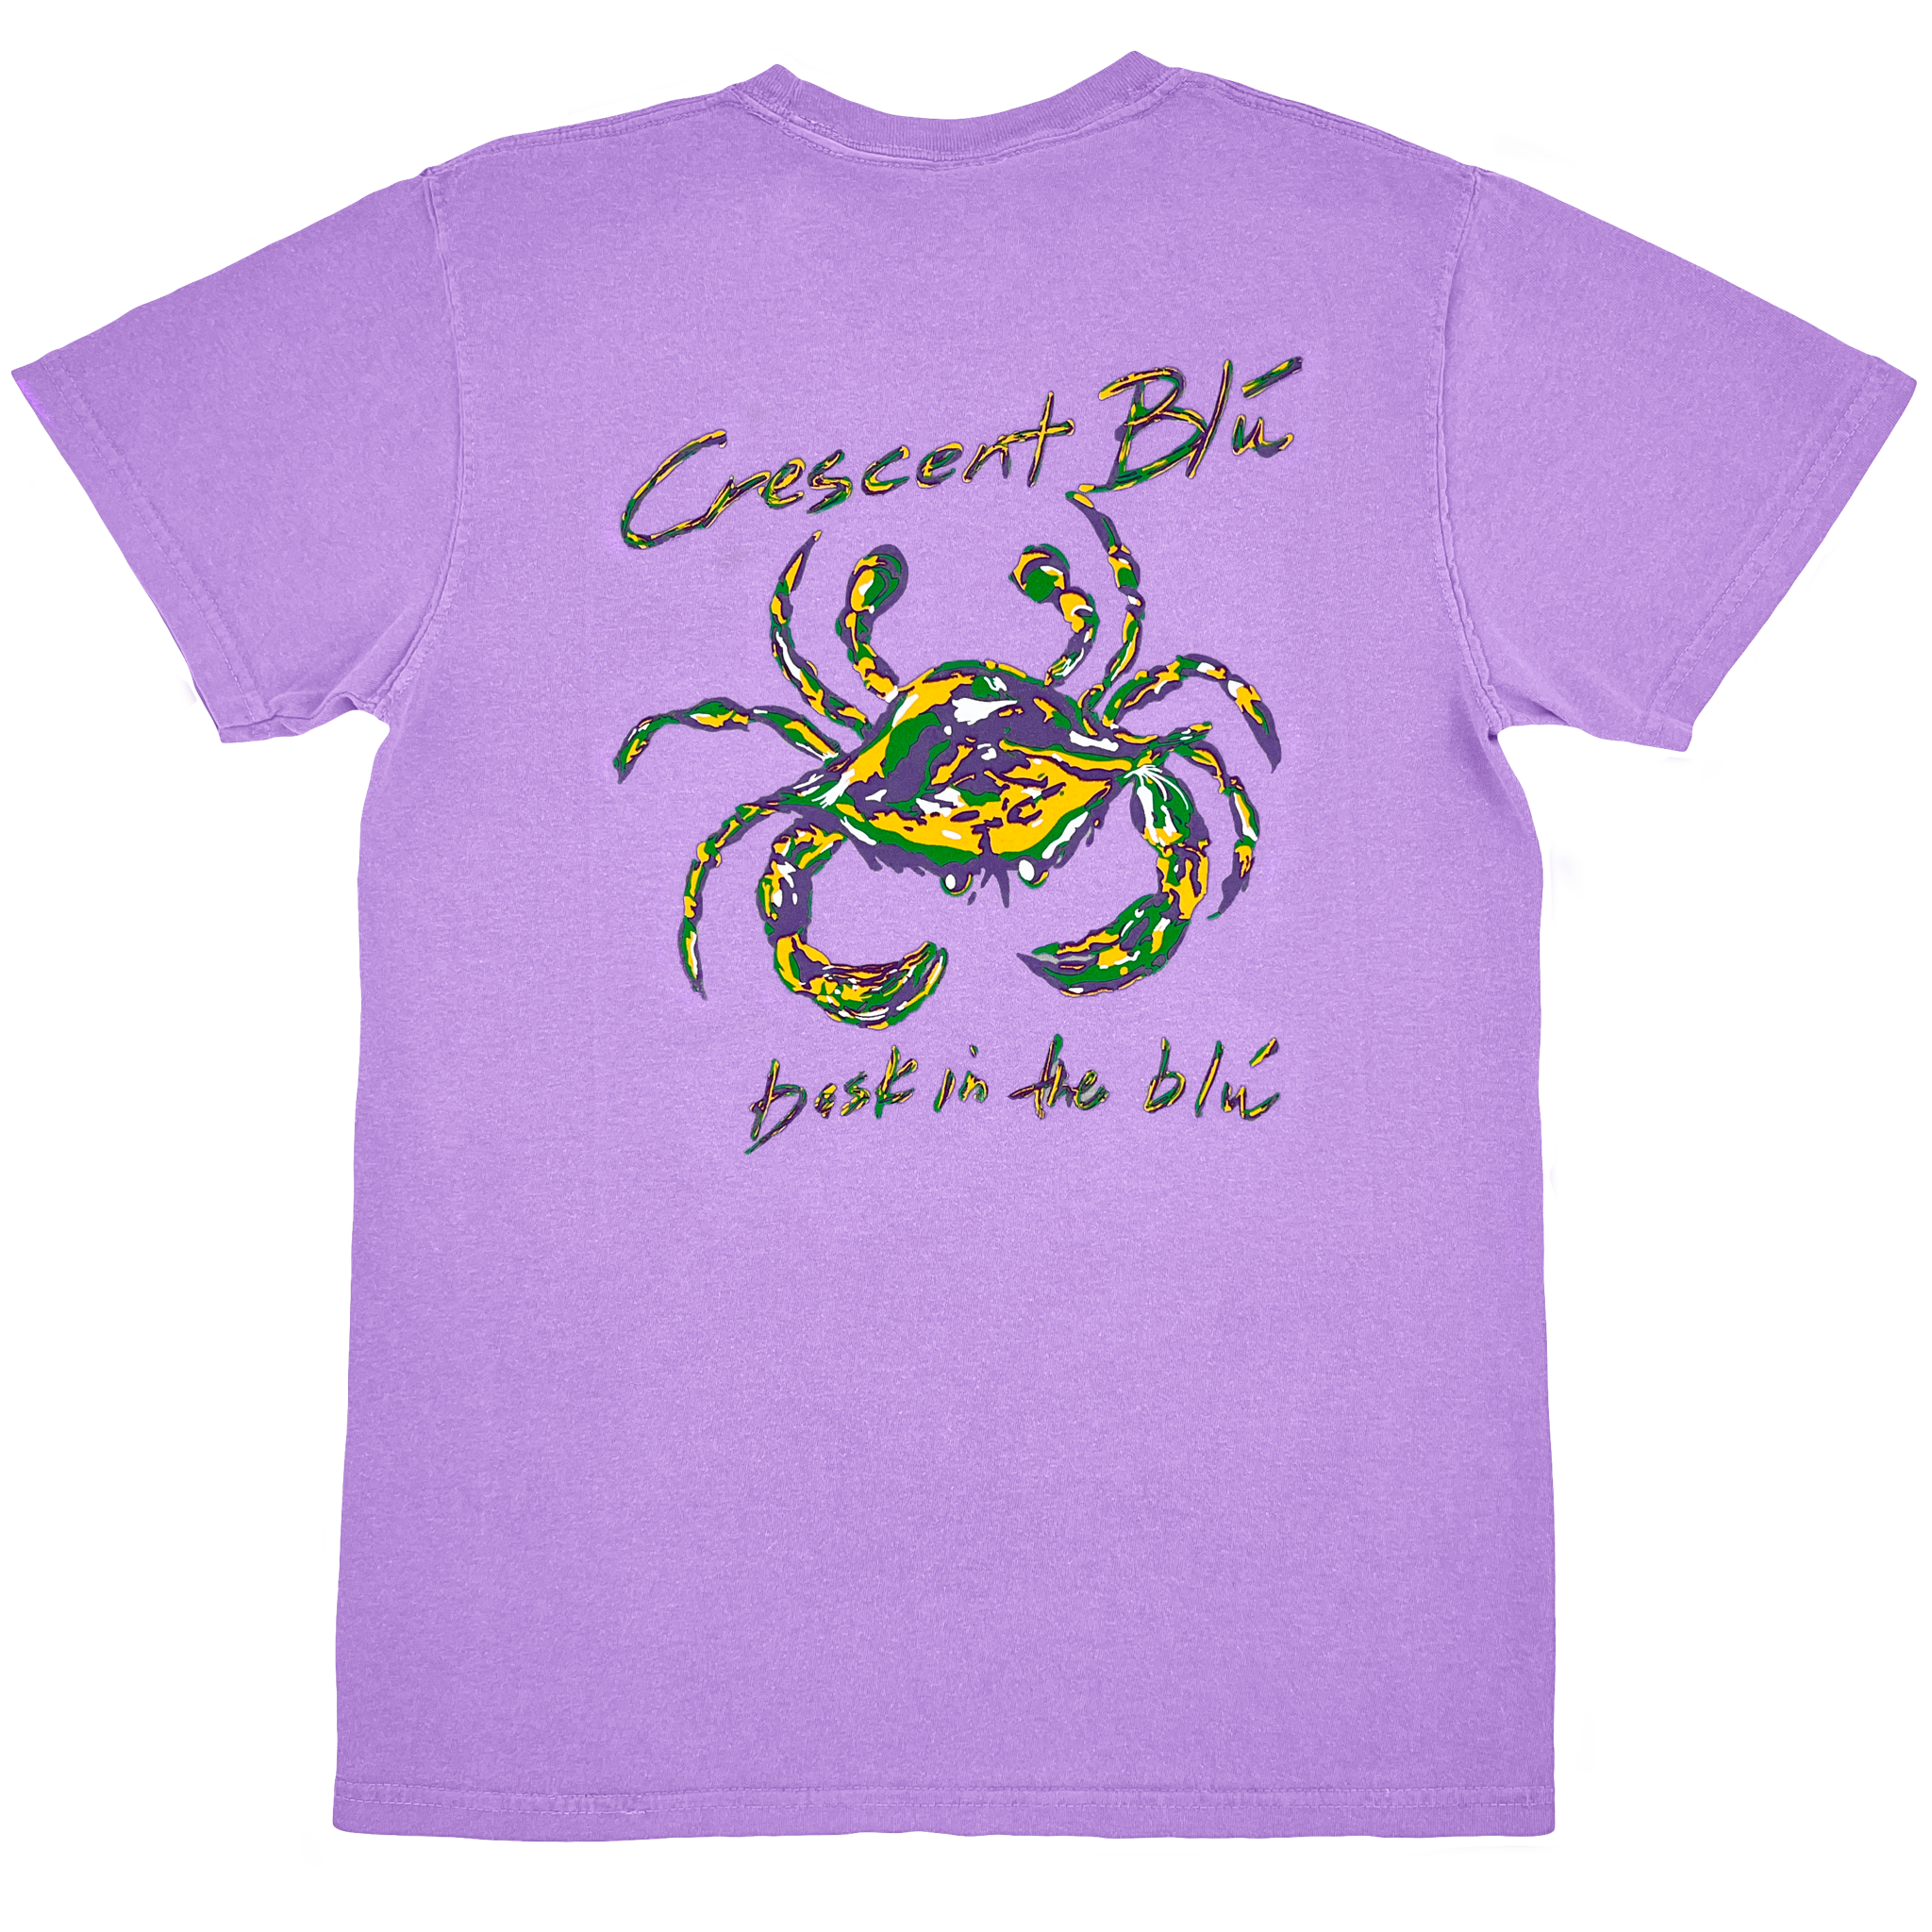 Short sleeve violet t-shirt. The Crescent Blu Mardi Gras logo centered on the back of the shirt. 